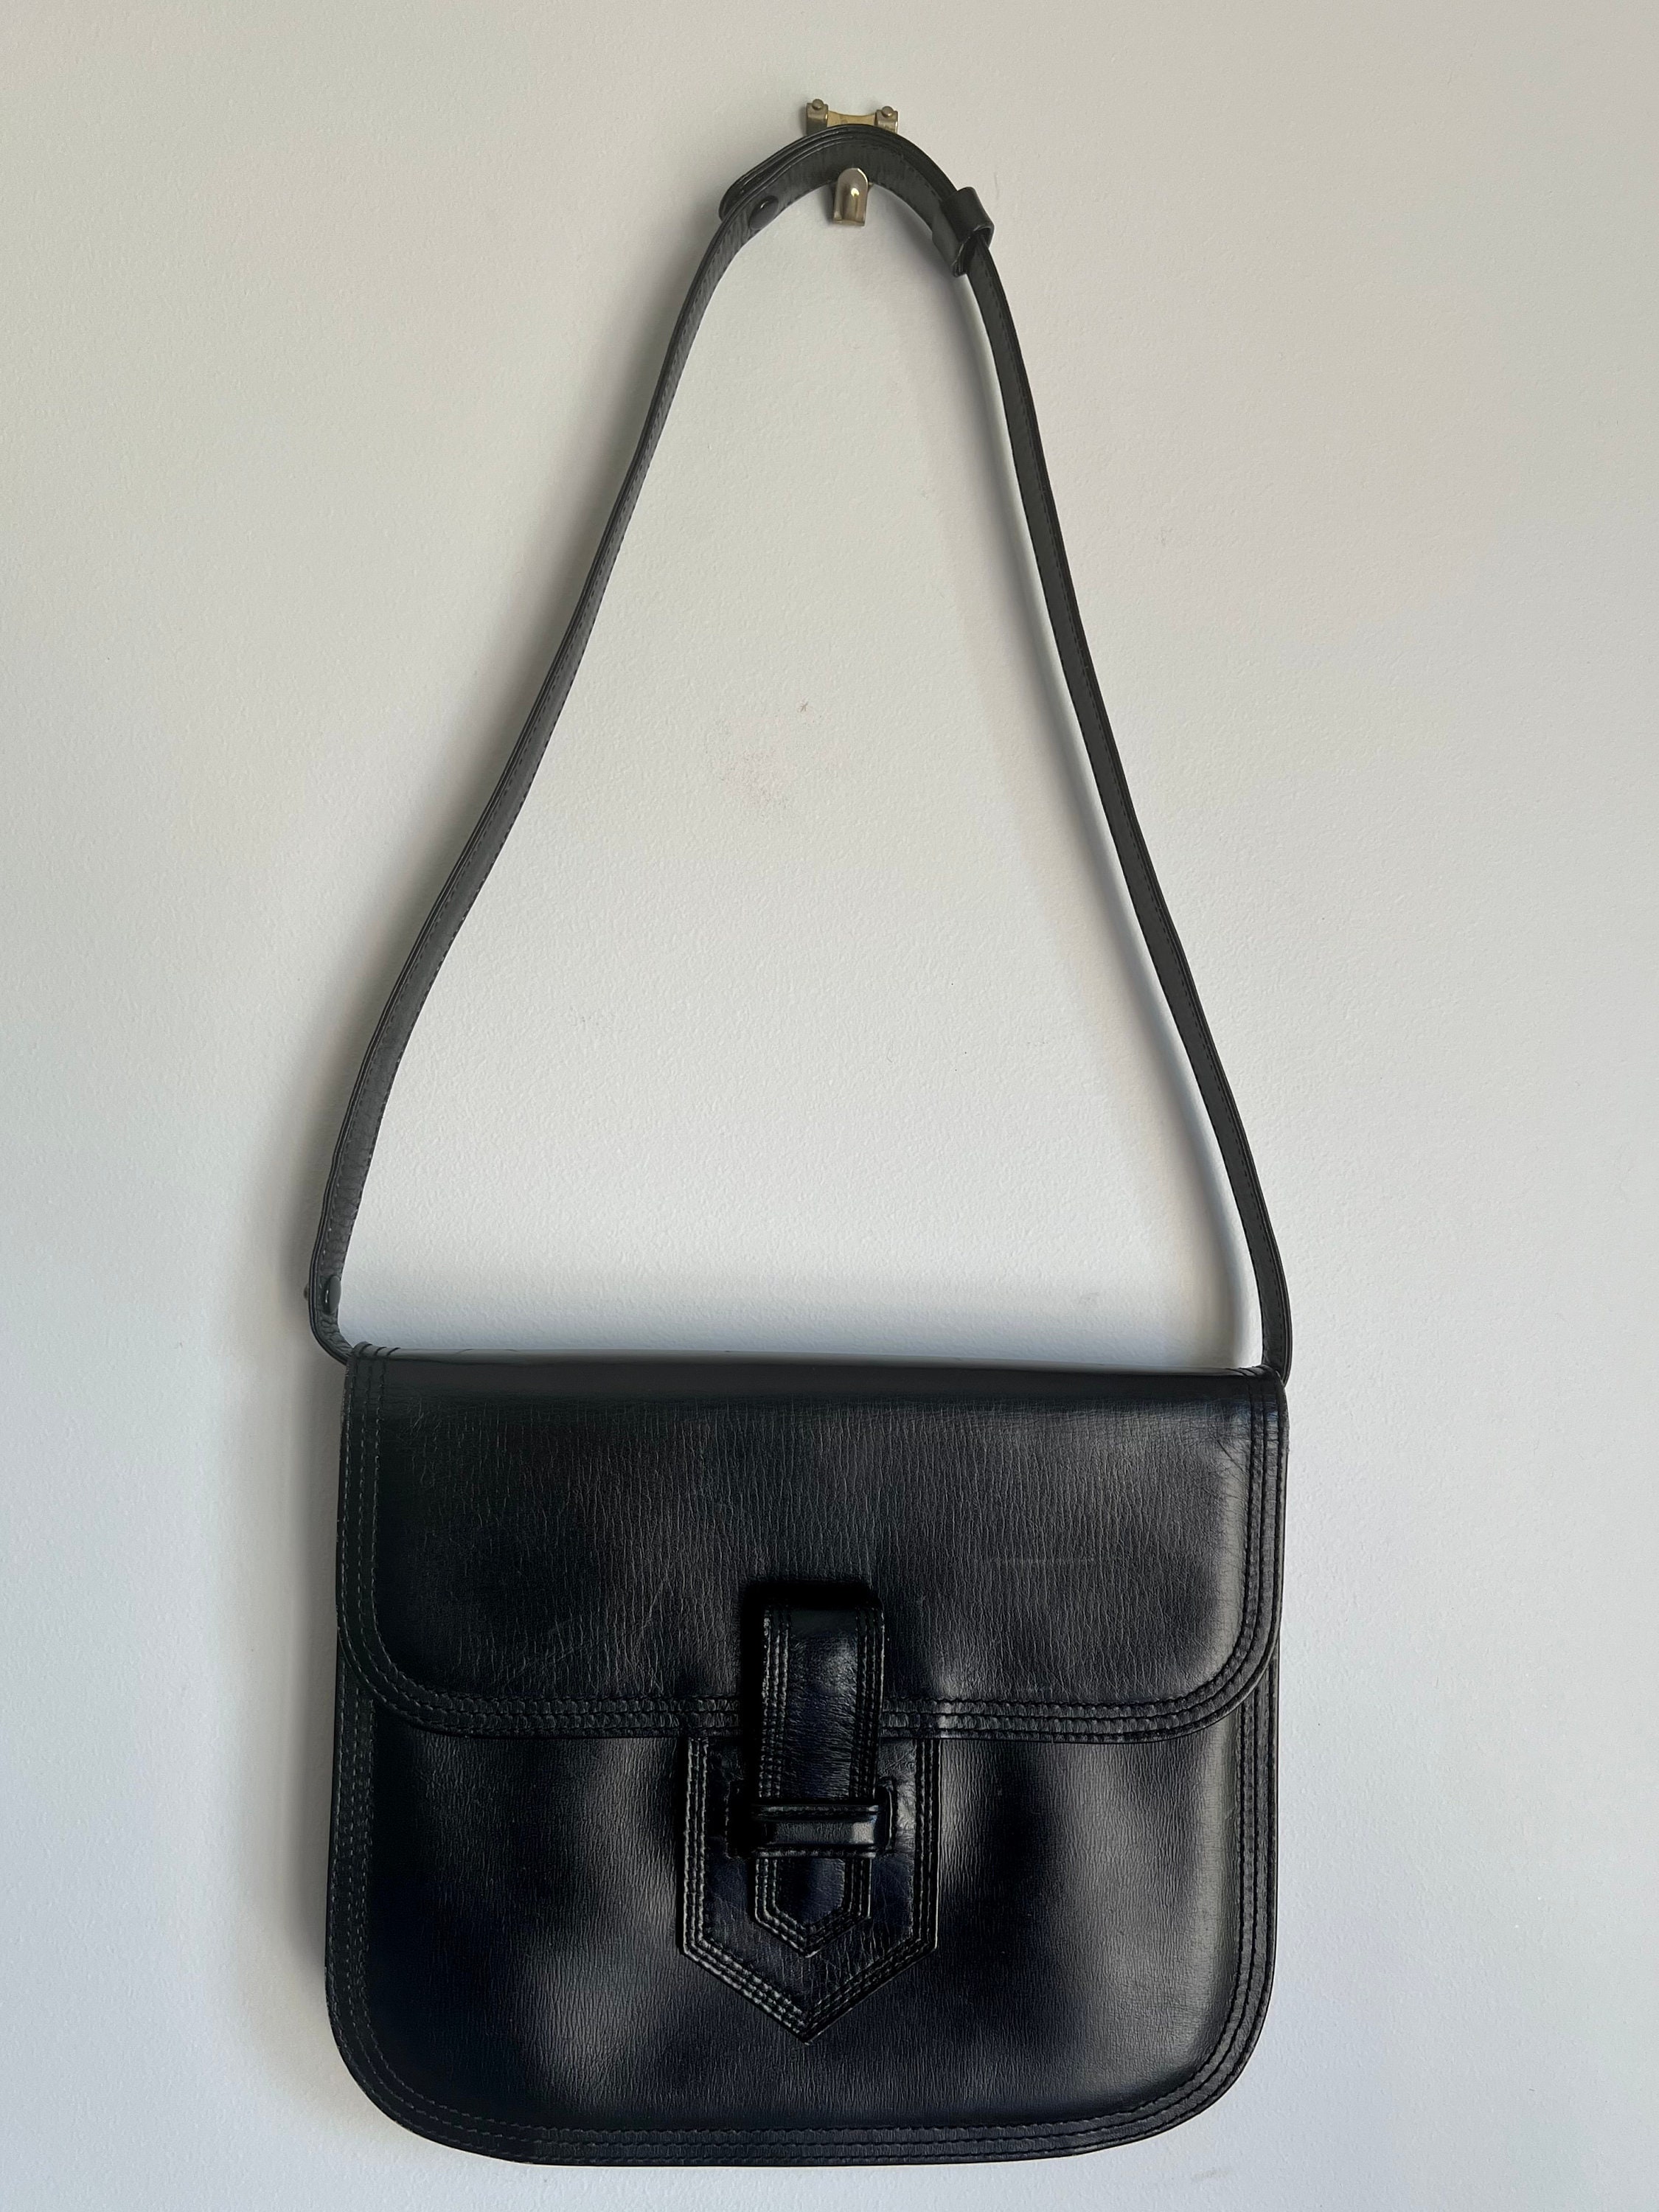 Vintage Printed Crossbody Bag, Luxury Design Zipper Purse, Simple